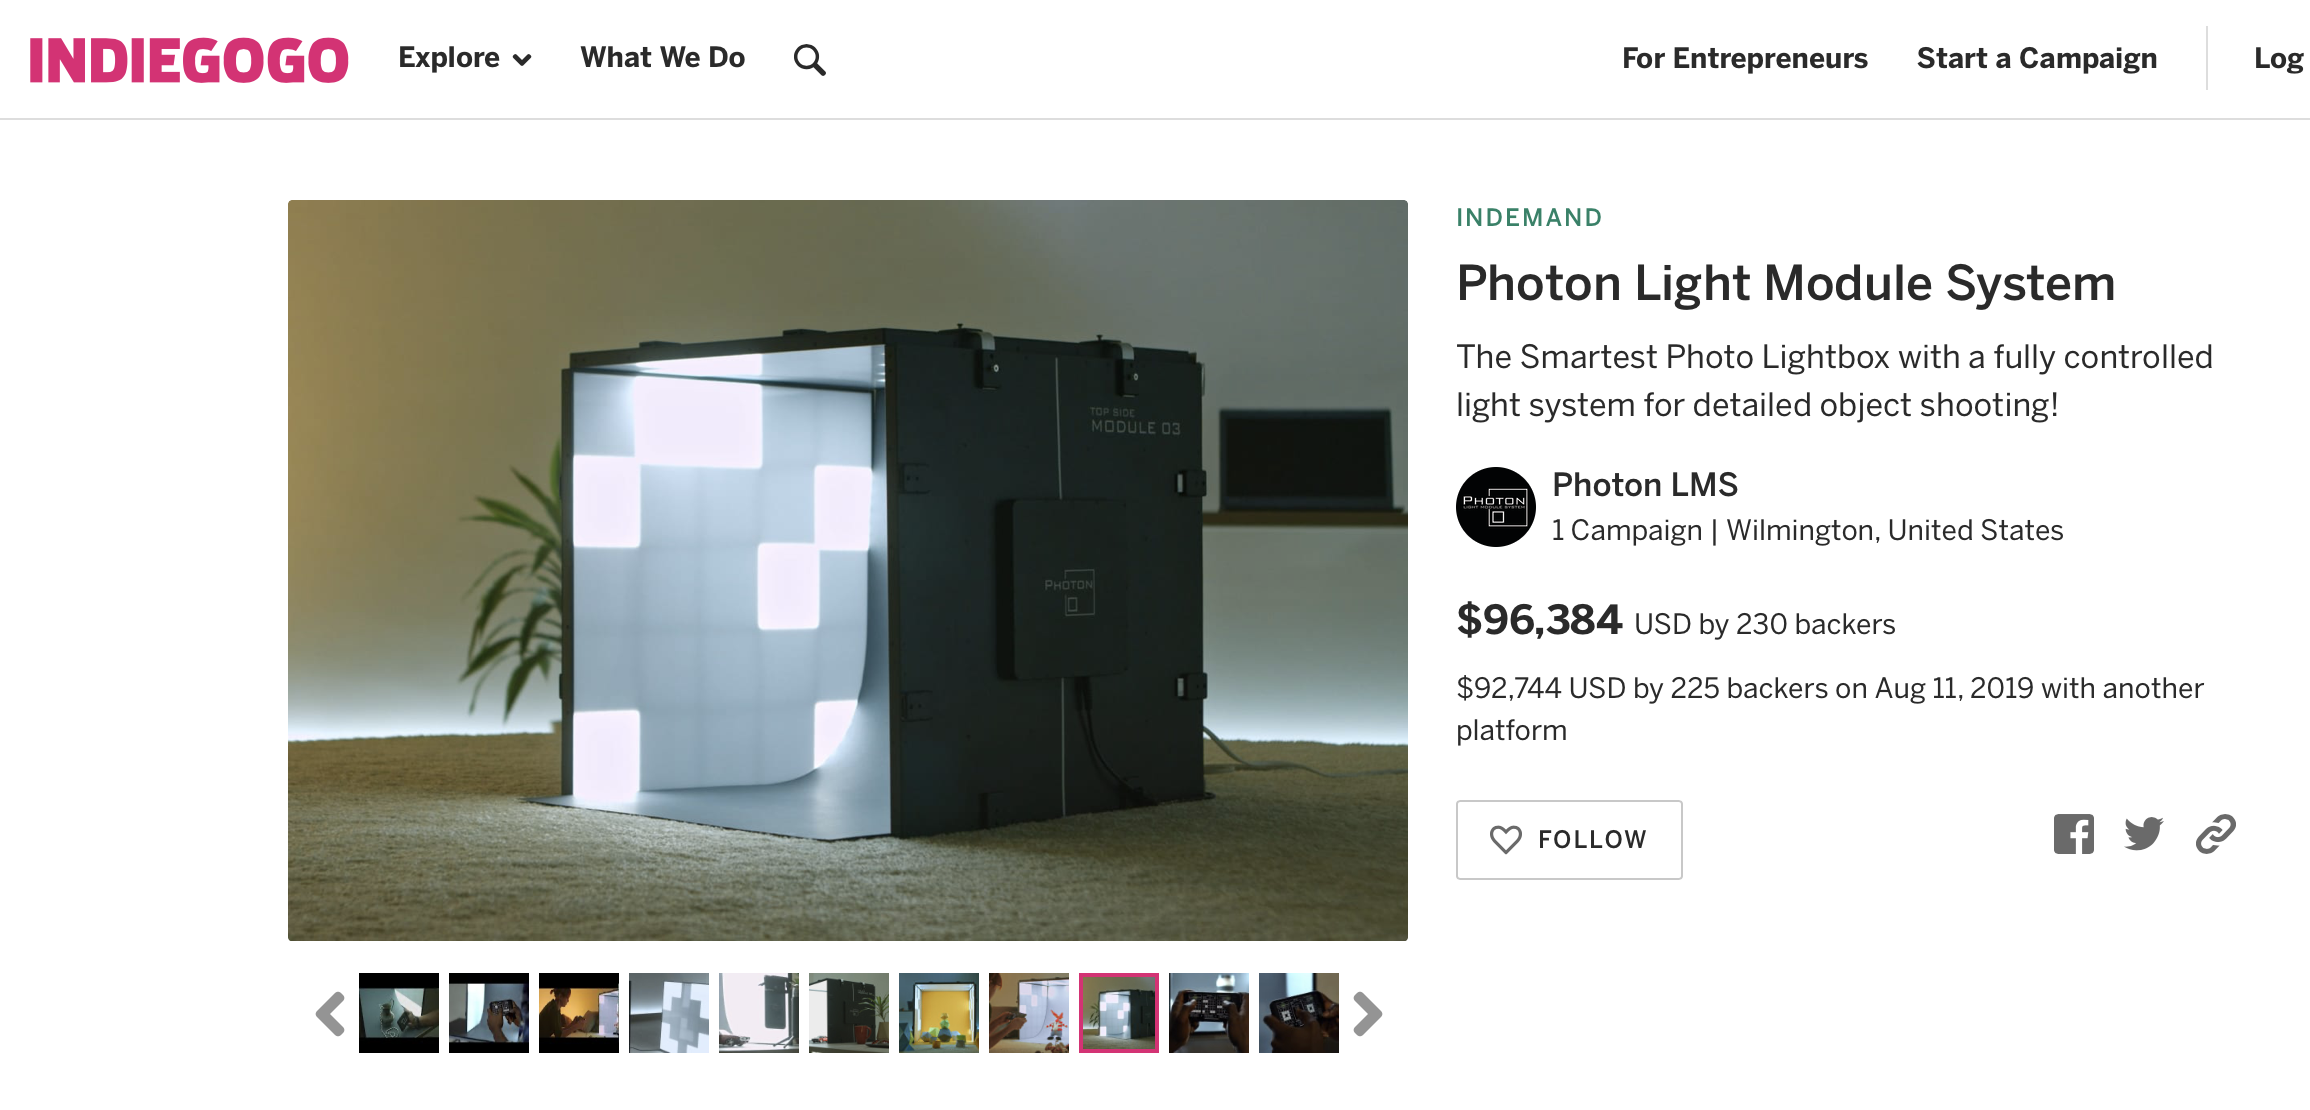 PHOTON Light Module System